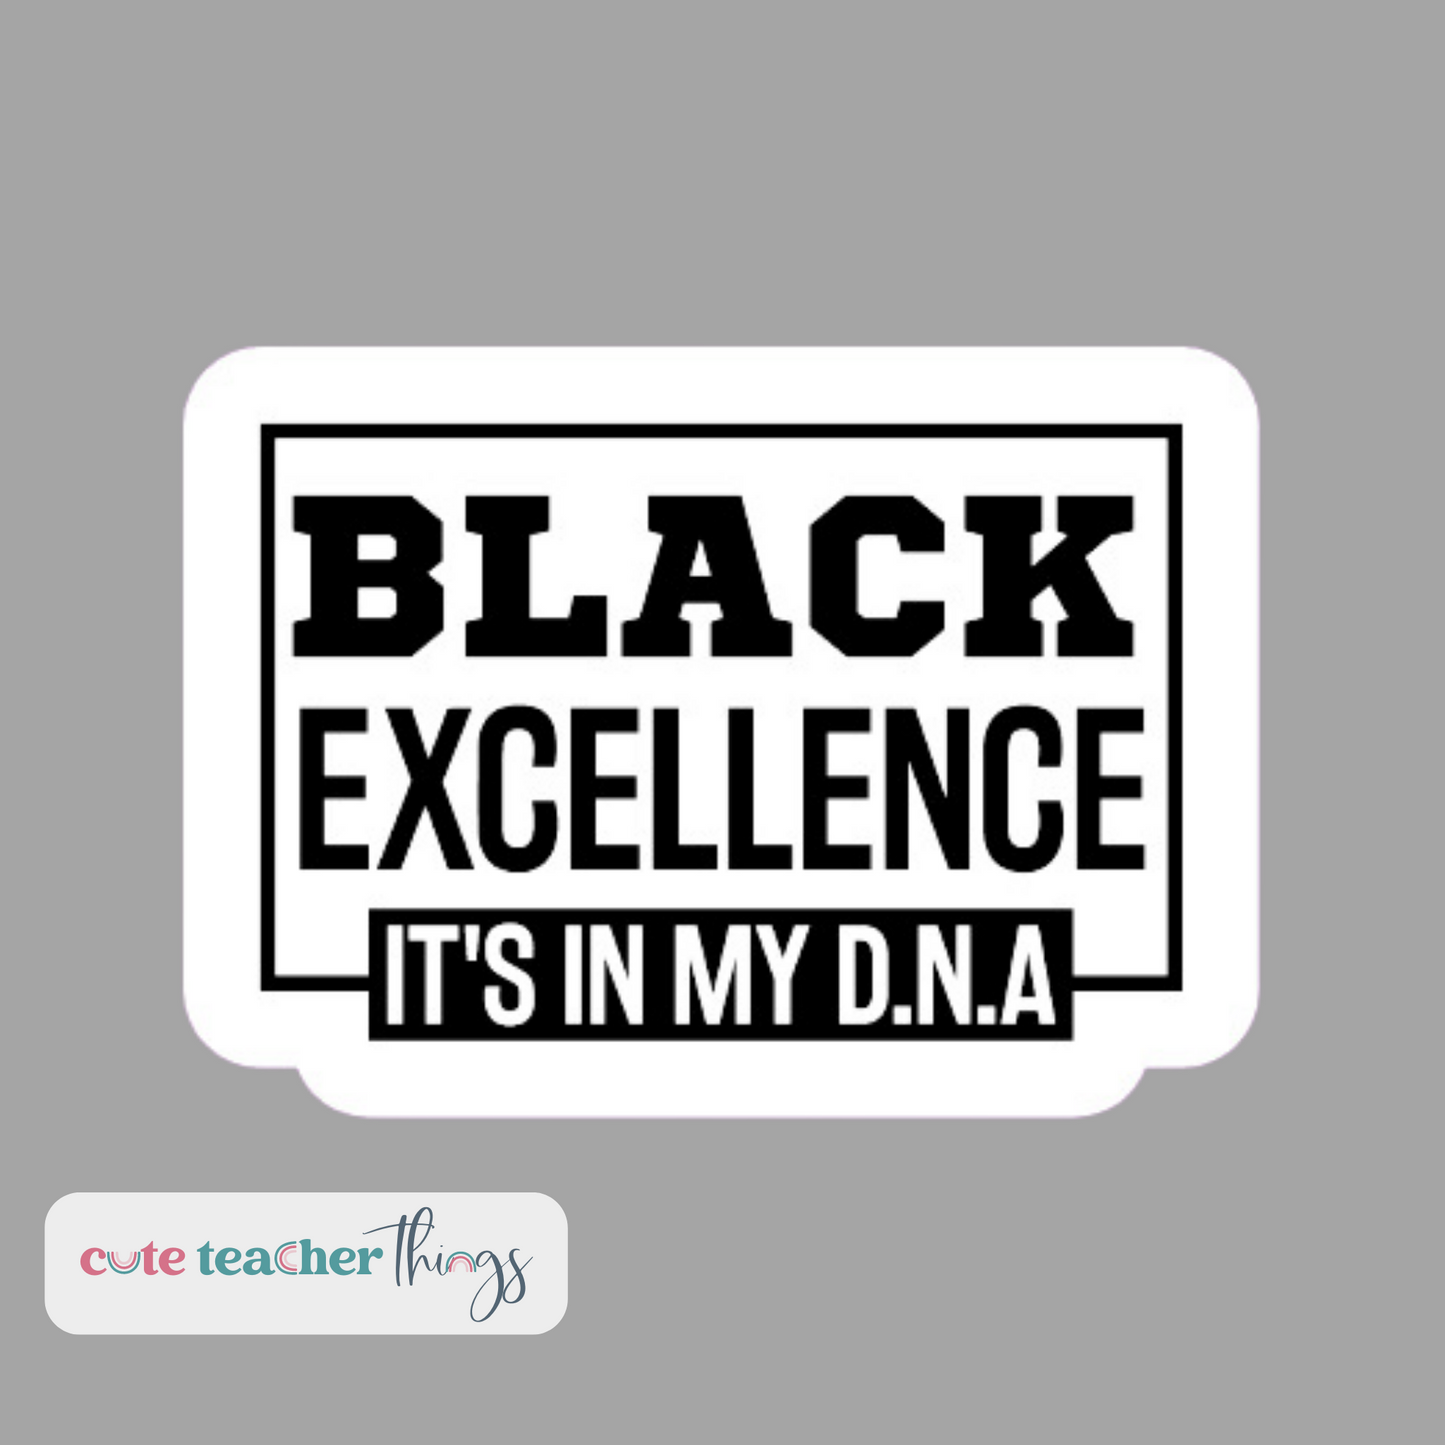 perfect gift for black educators, appreciation gift, proud black sticker